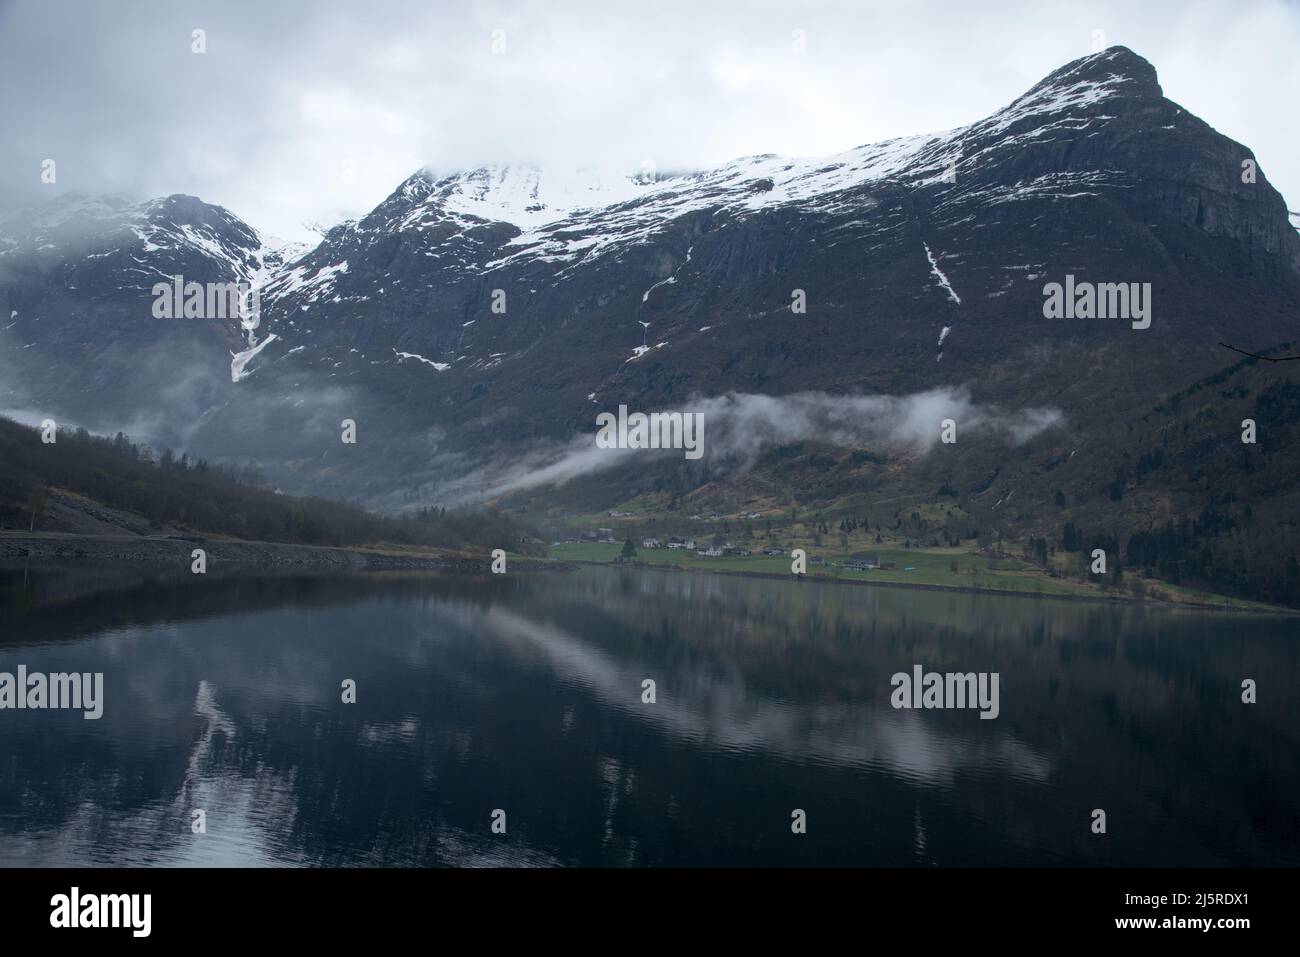 Coperto da folte nuvole in tempo nebbioso lago Oldenvatnet offre una vista mistica al villaggio Olden in Norvegia. Tiefhängenden Wolken mit Nebelschwad Foto Stock